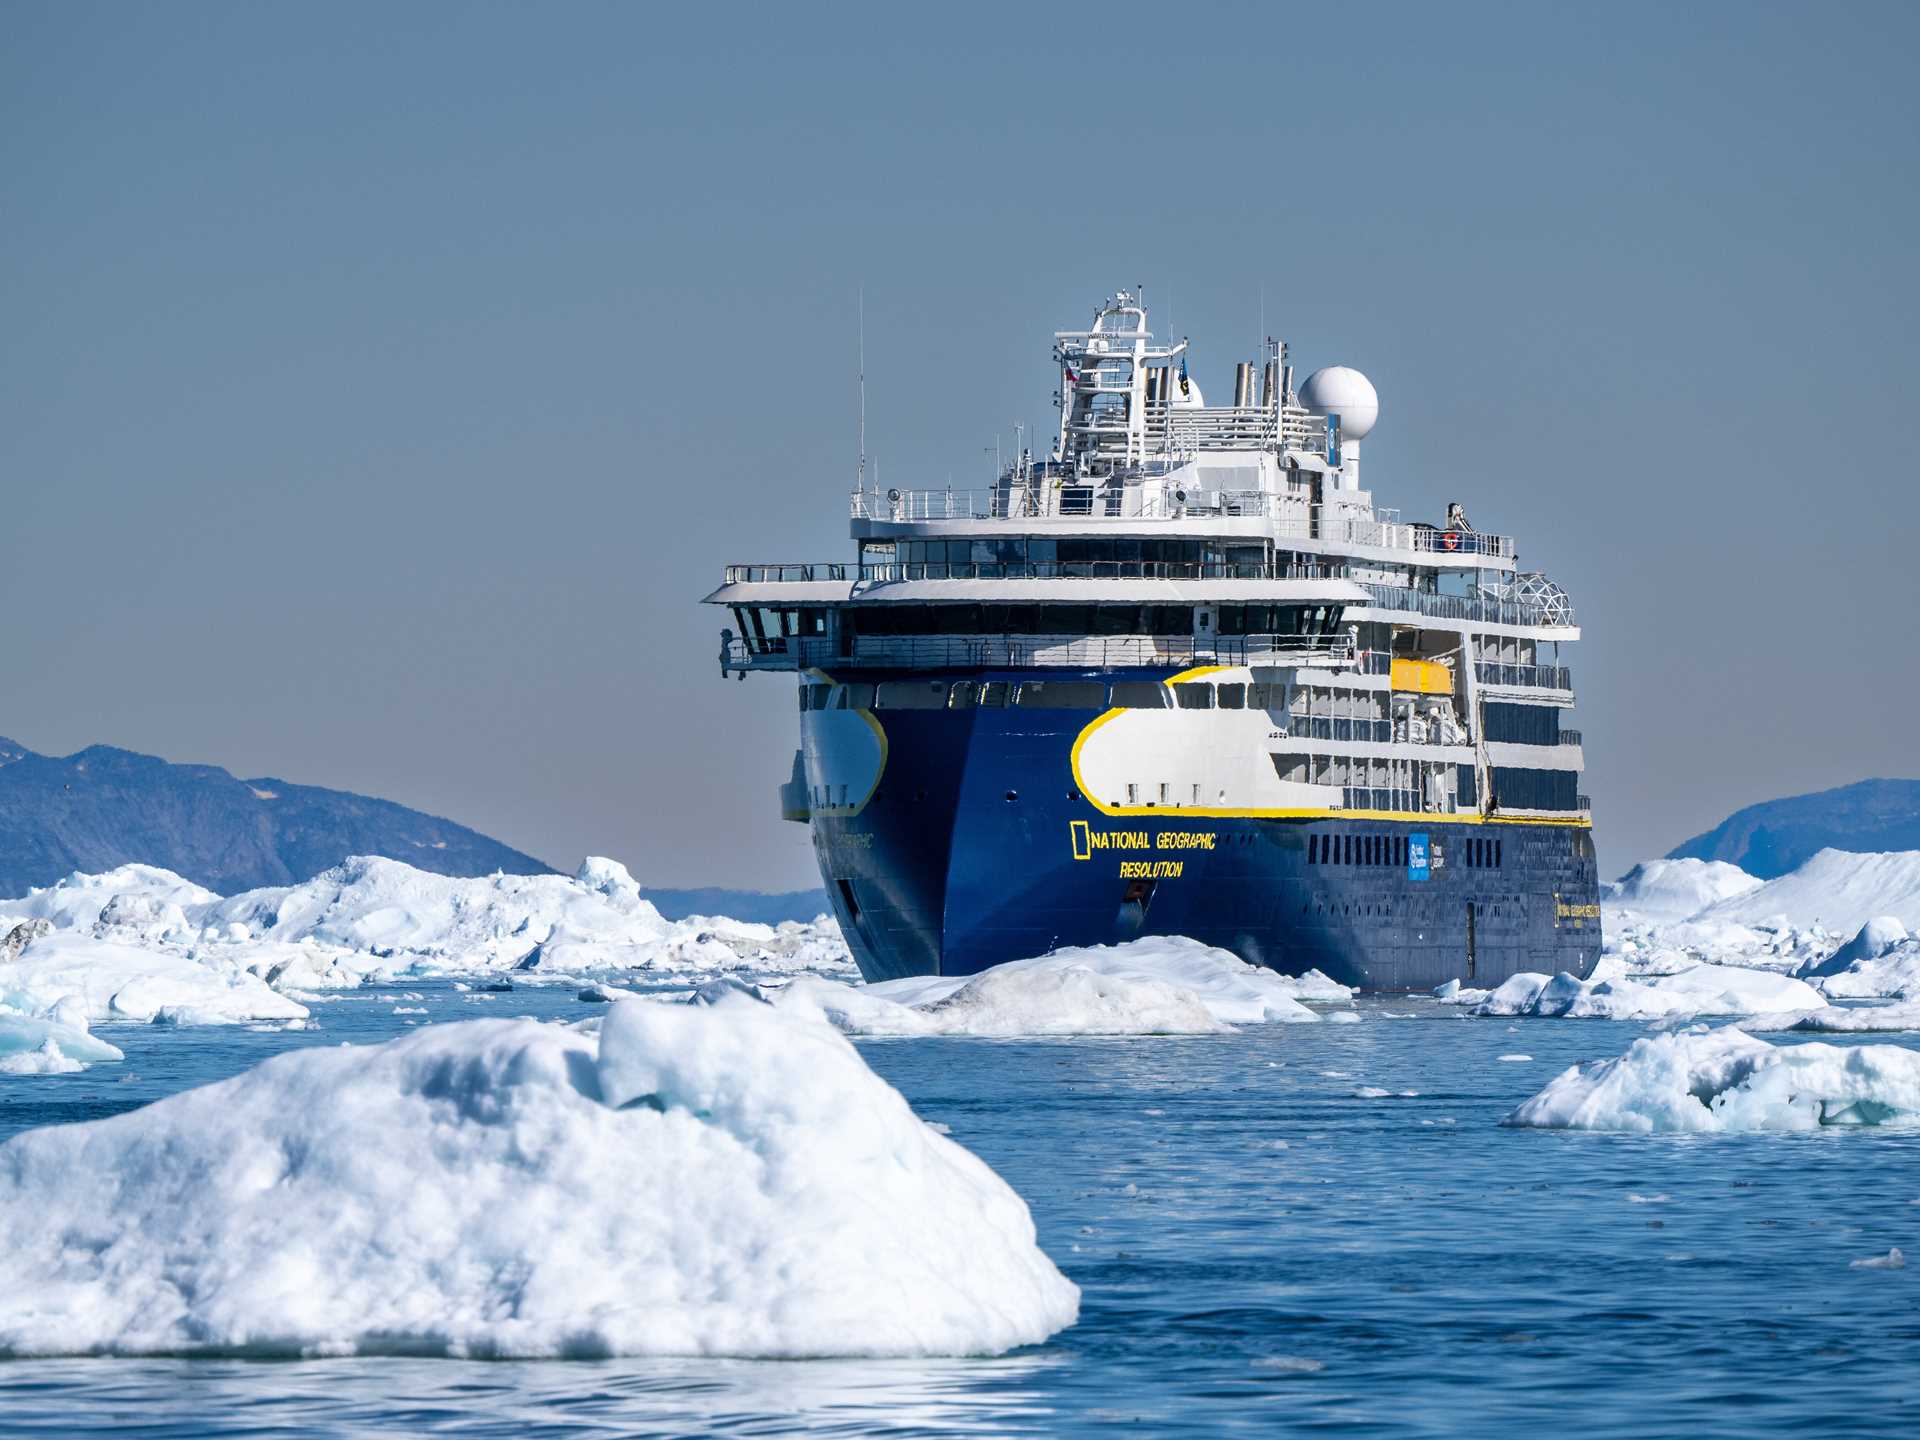 National geographic endurance sails amongst icebergs